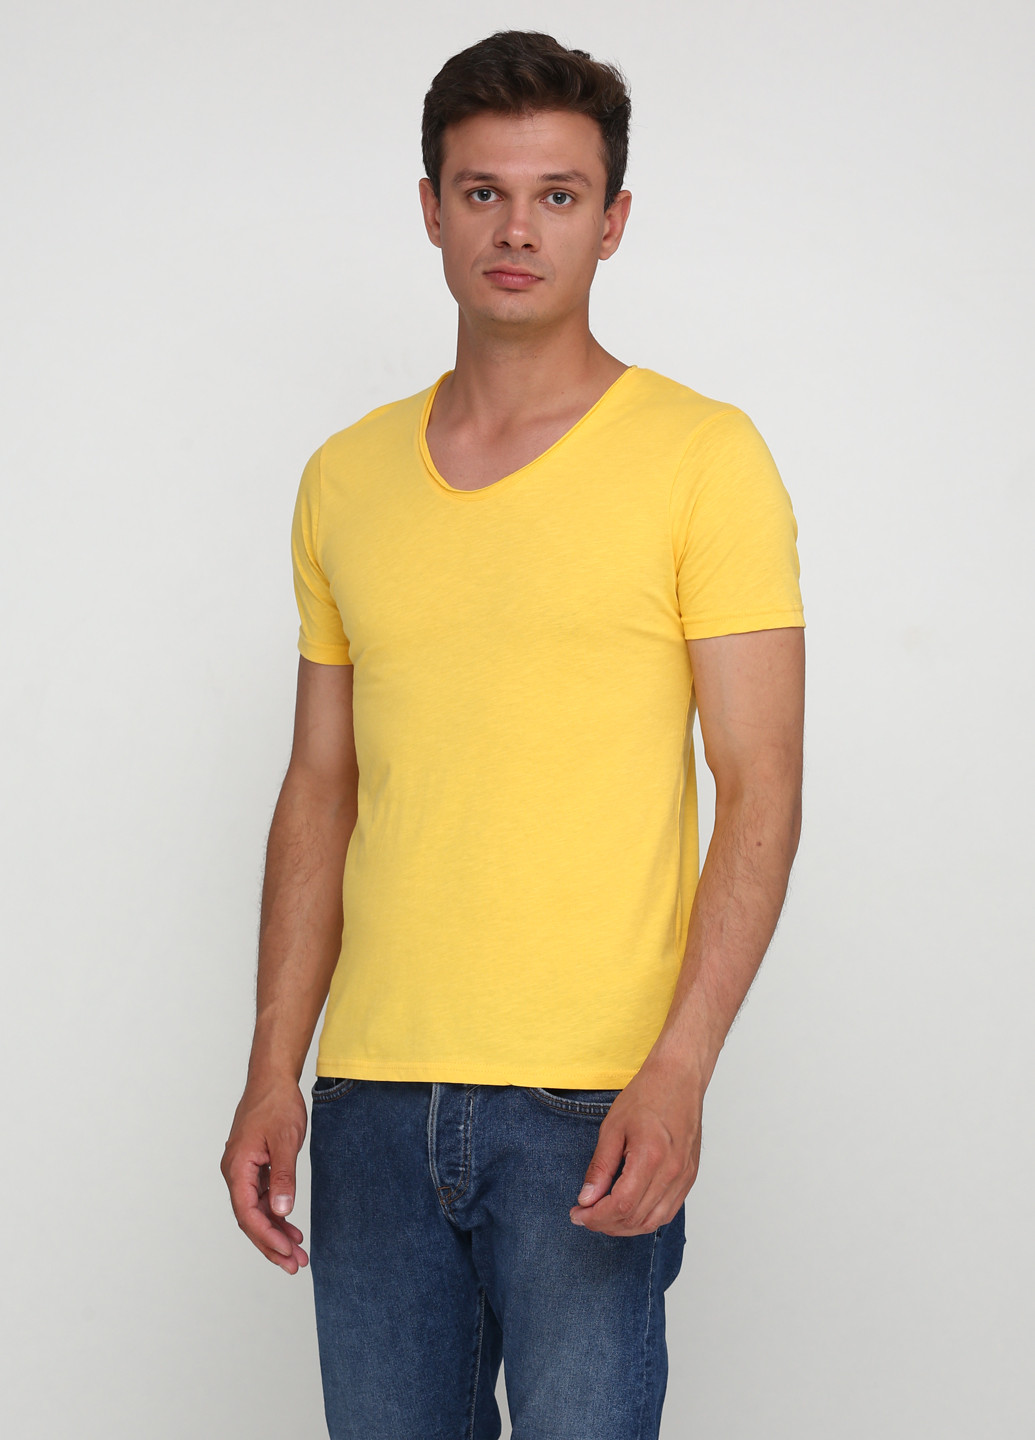 Желтая футболка C&A